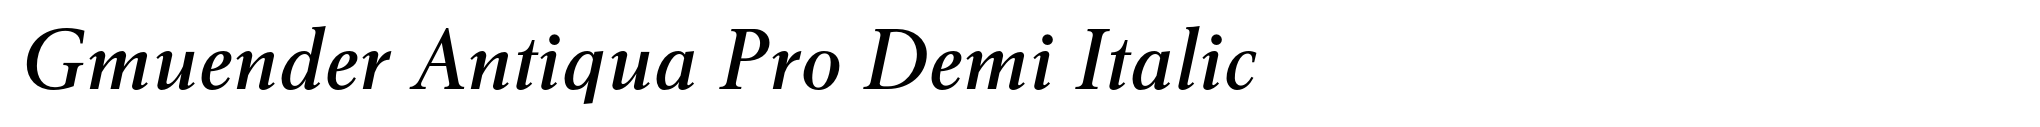 Gmuender Antiqua Pro Demi Italic image